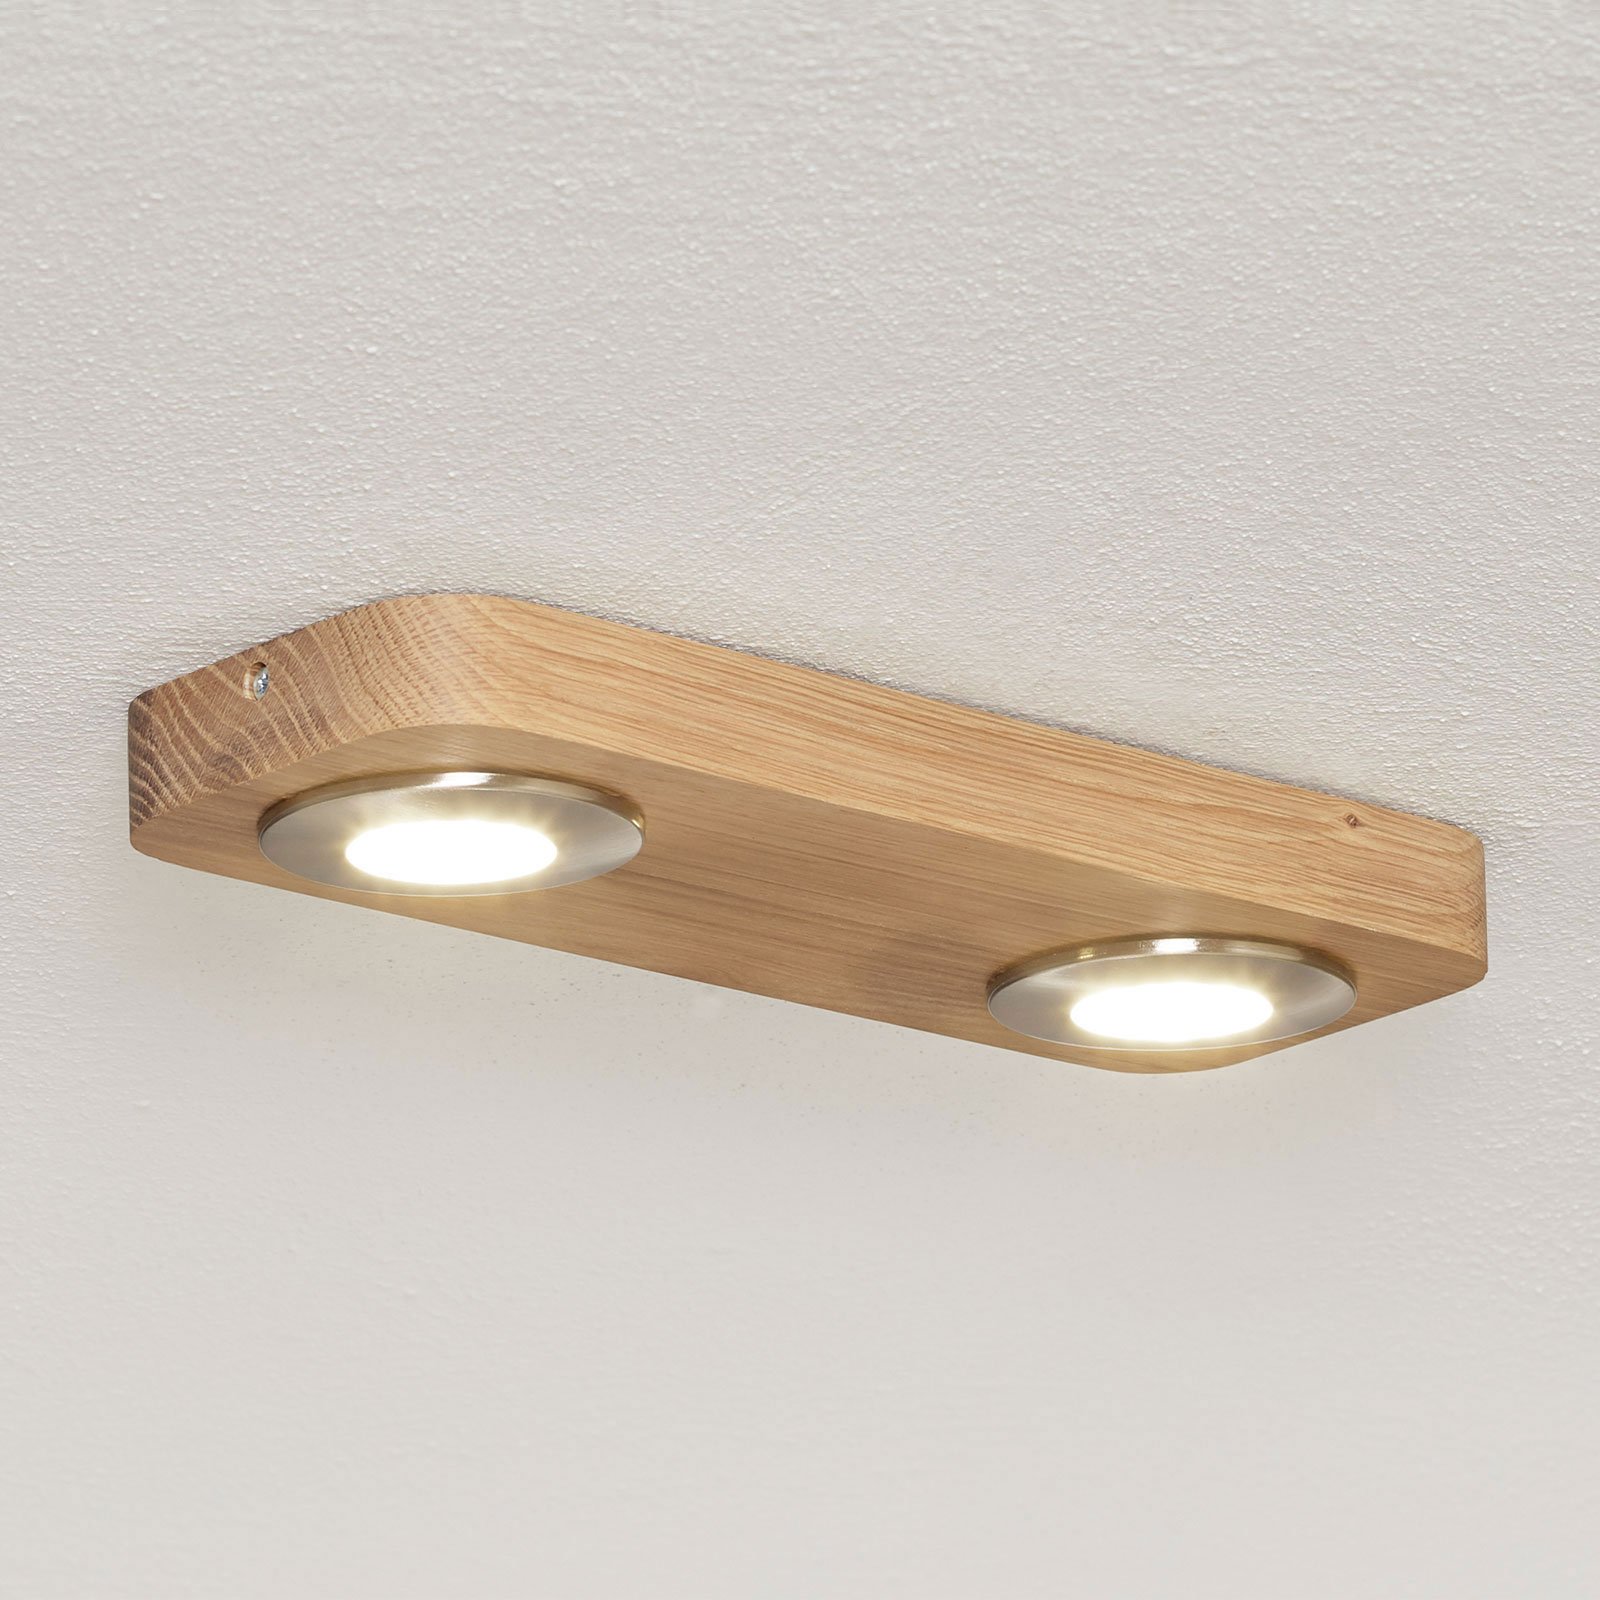 LED plafondlamp Sunniva in natuurl. houten ontwerp